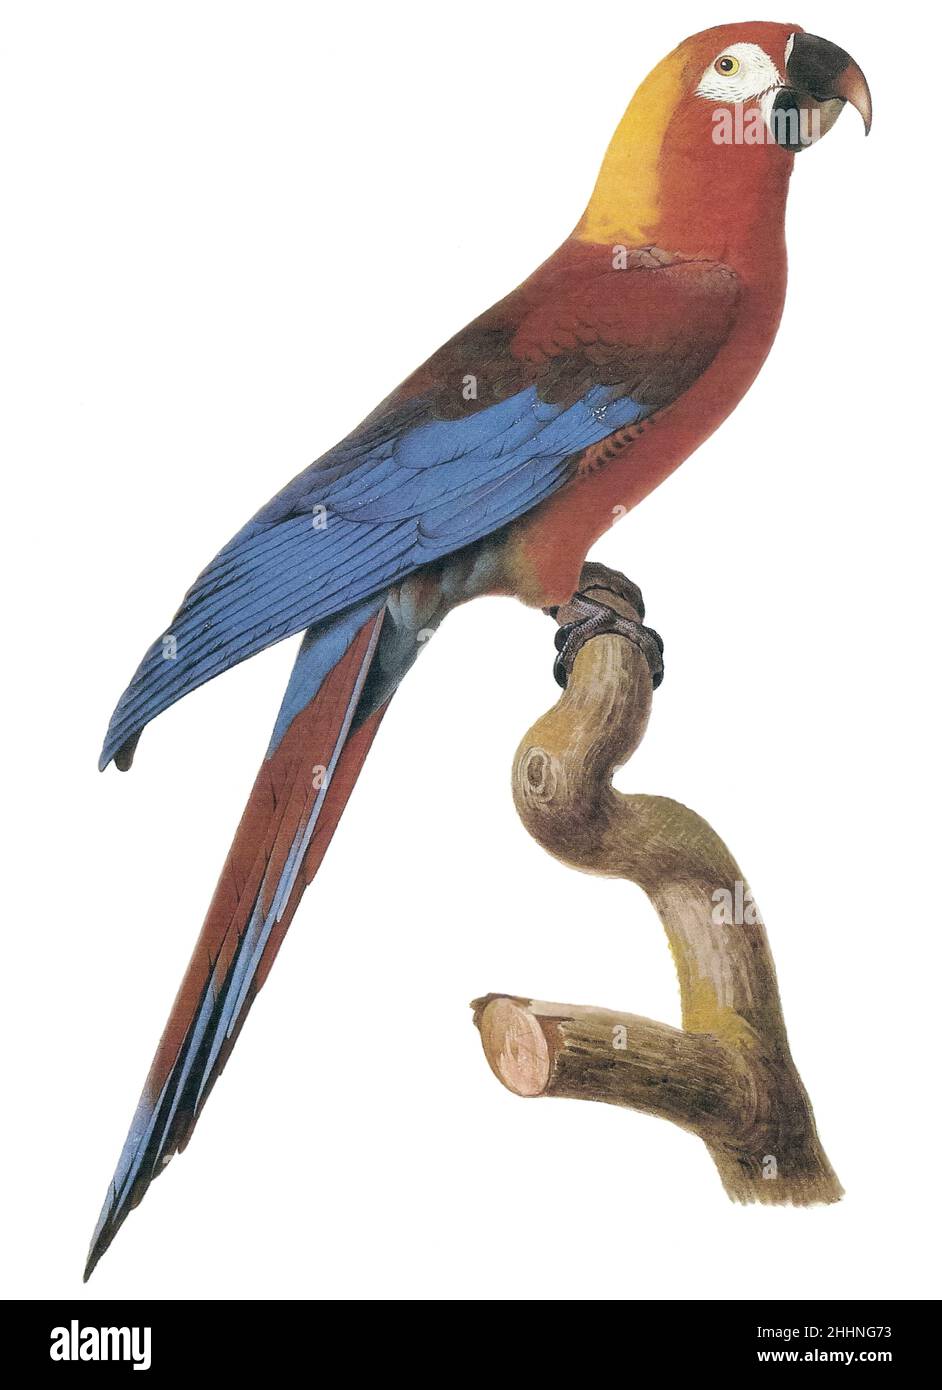 Hispaniolan macaw (Ara tricolor) AKA Cuban macaw or Cuban red macaw Stock Photo